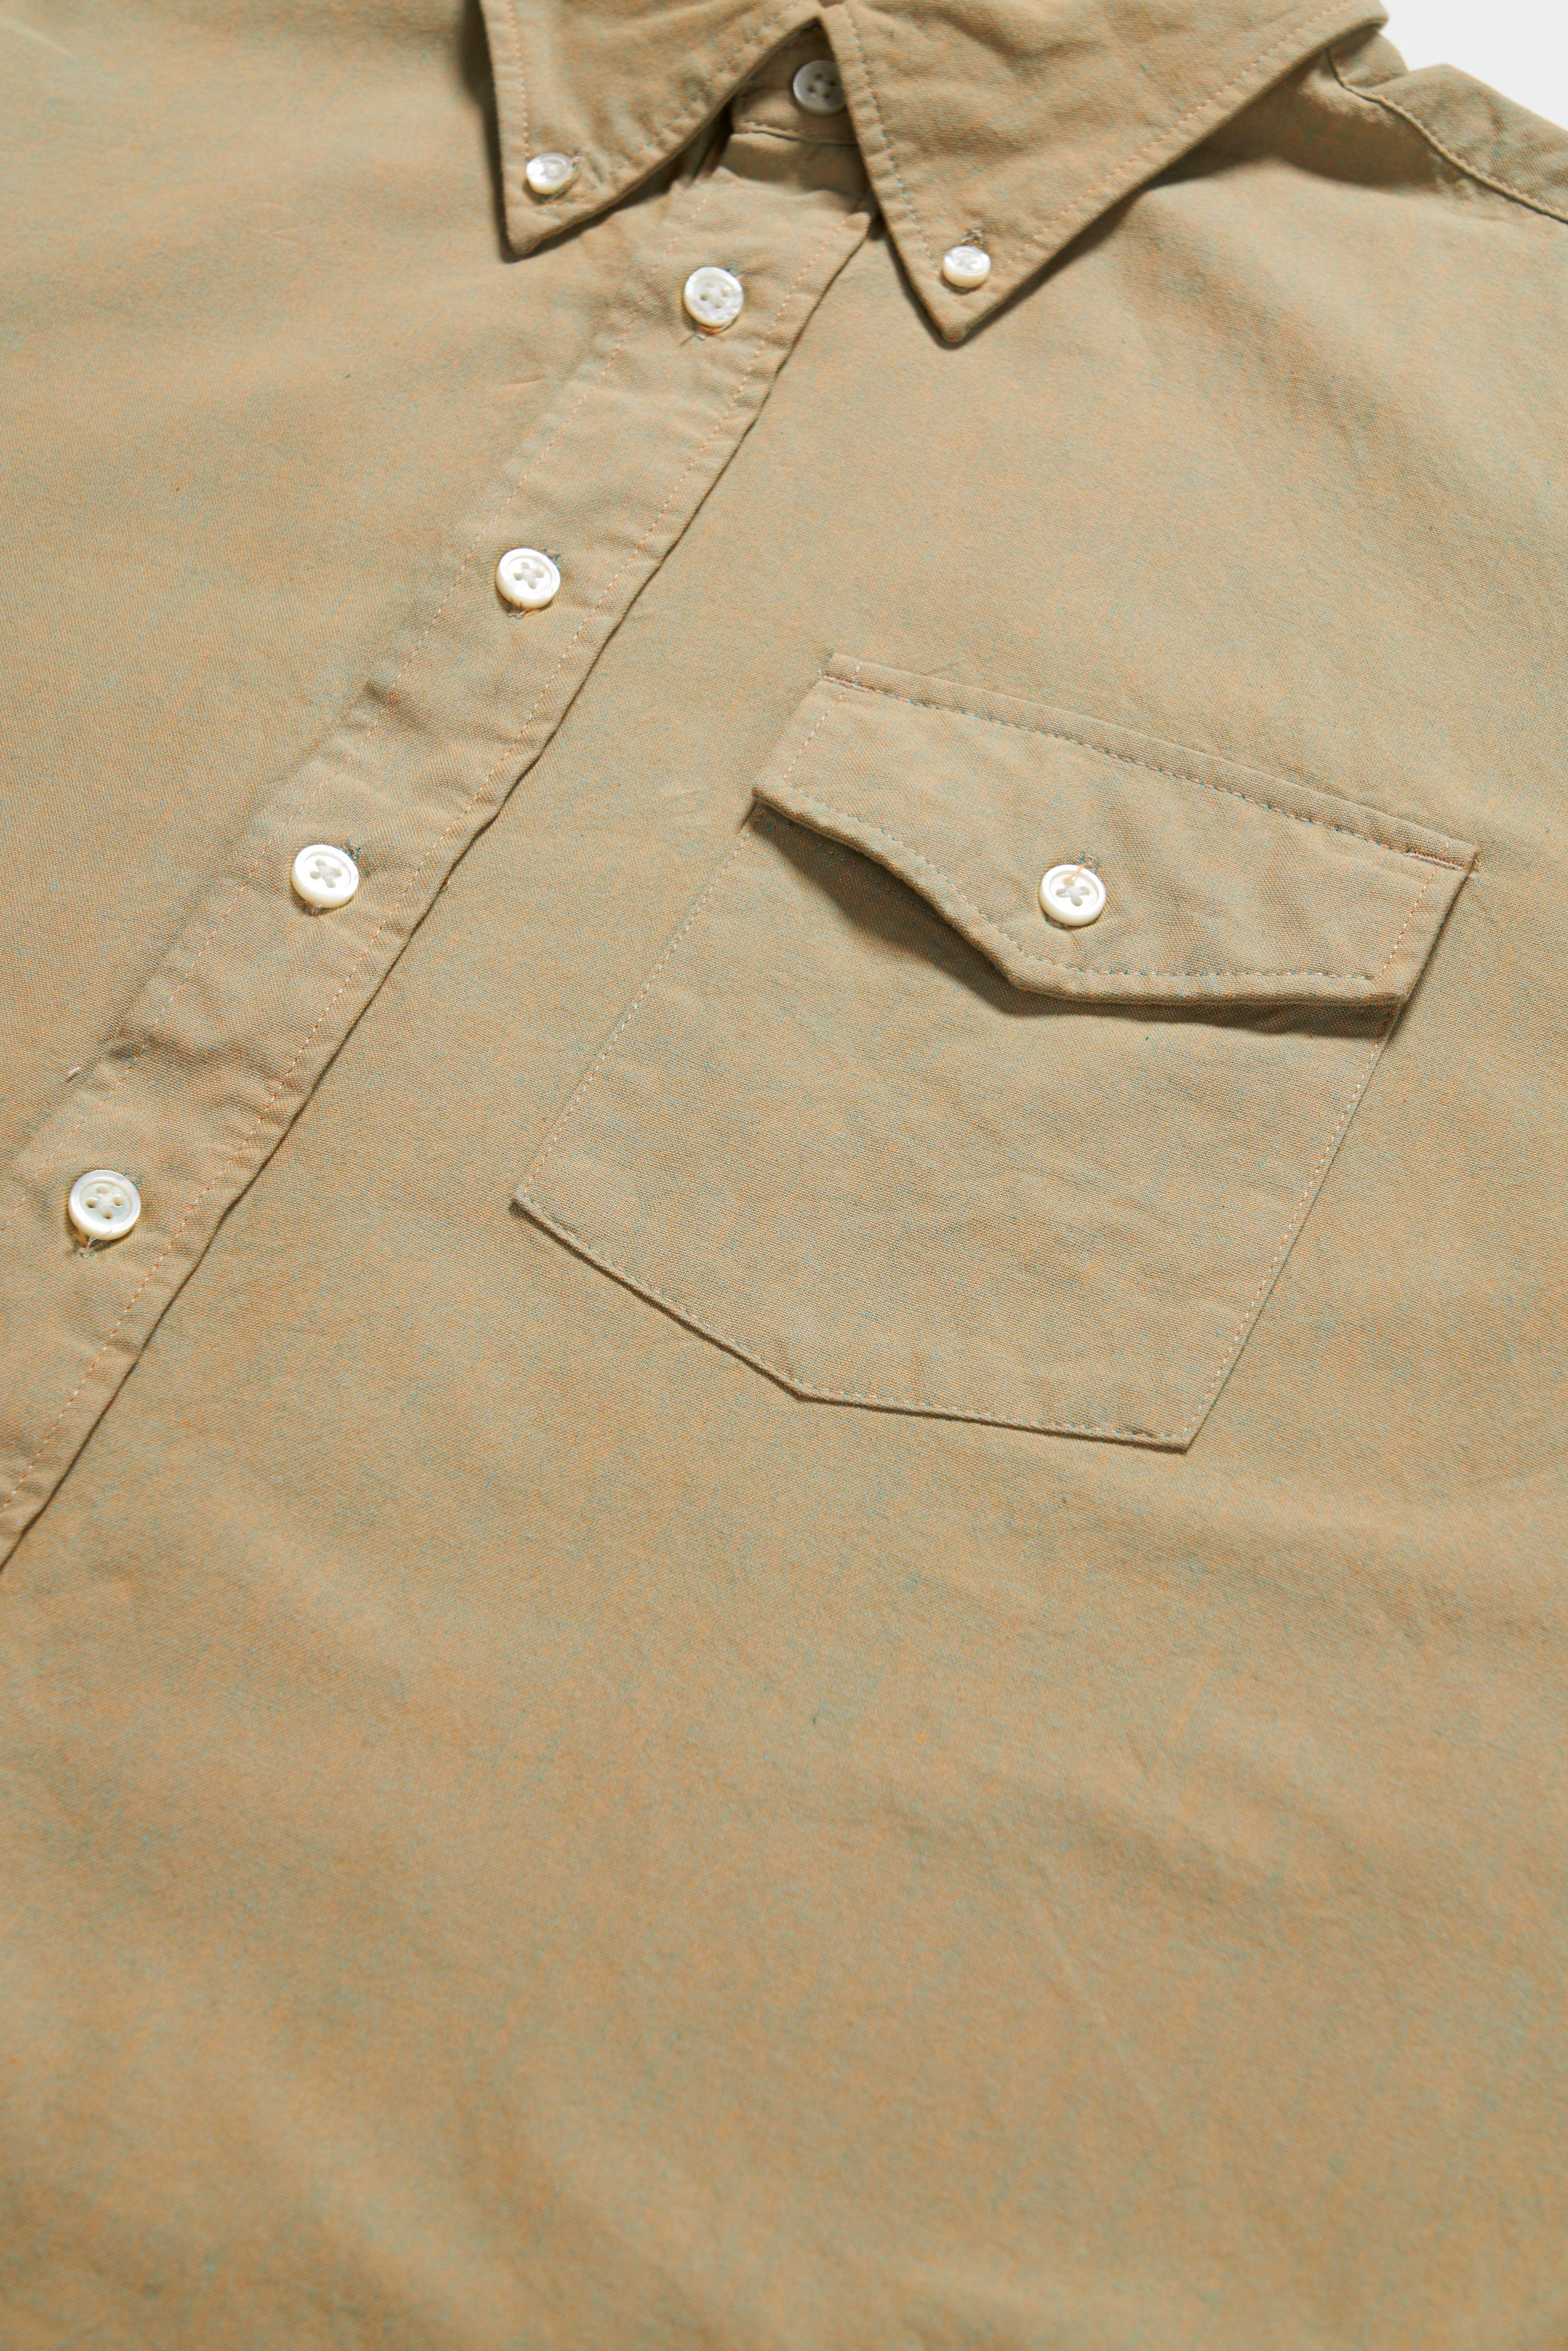 Ivy BD Shirt - Khaki Cotton Iridescent